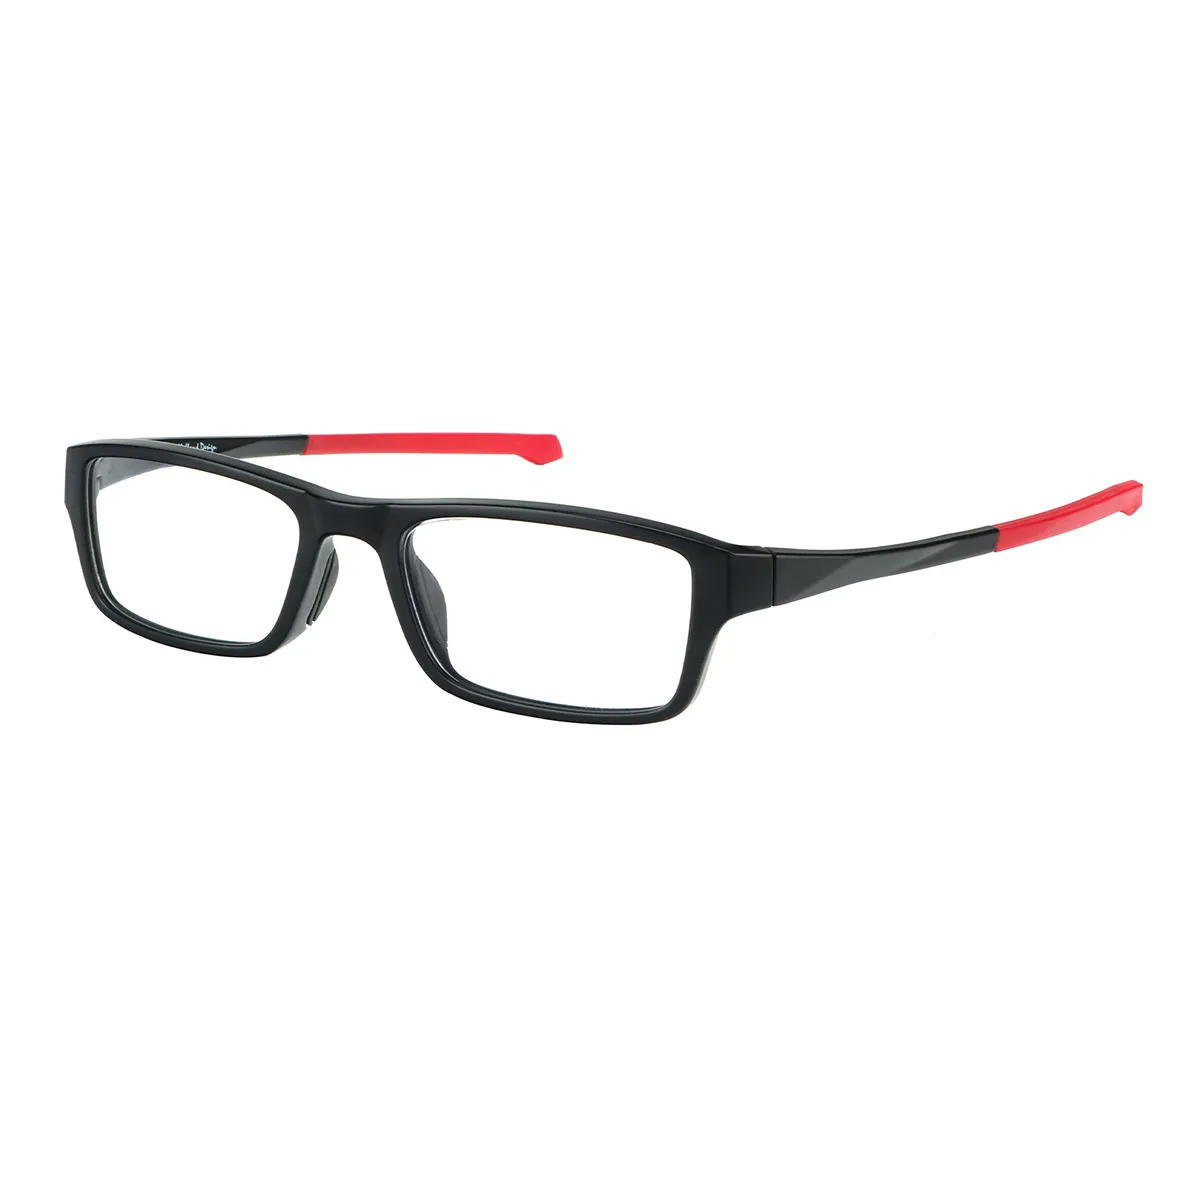 Arch - Rectangle Black-Red Glasses for Men & Women